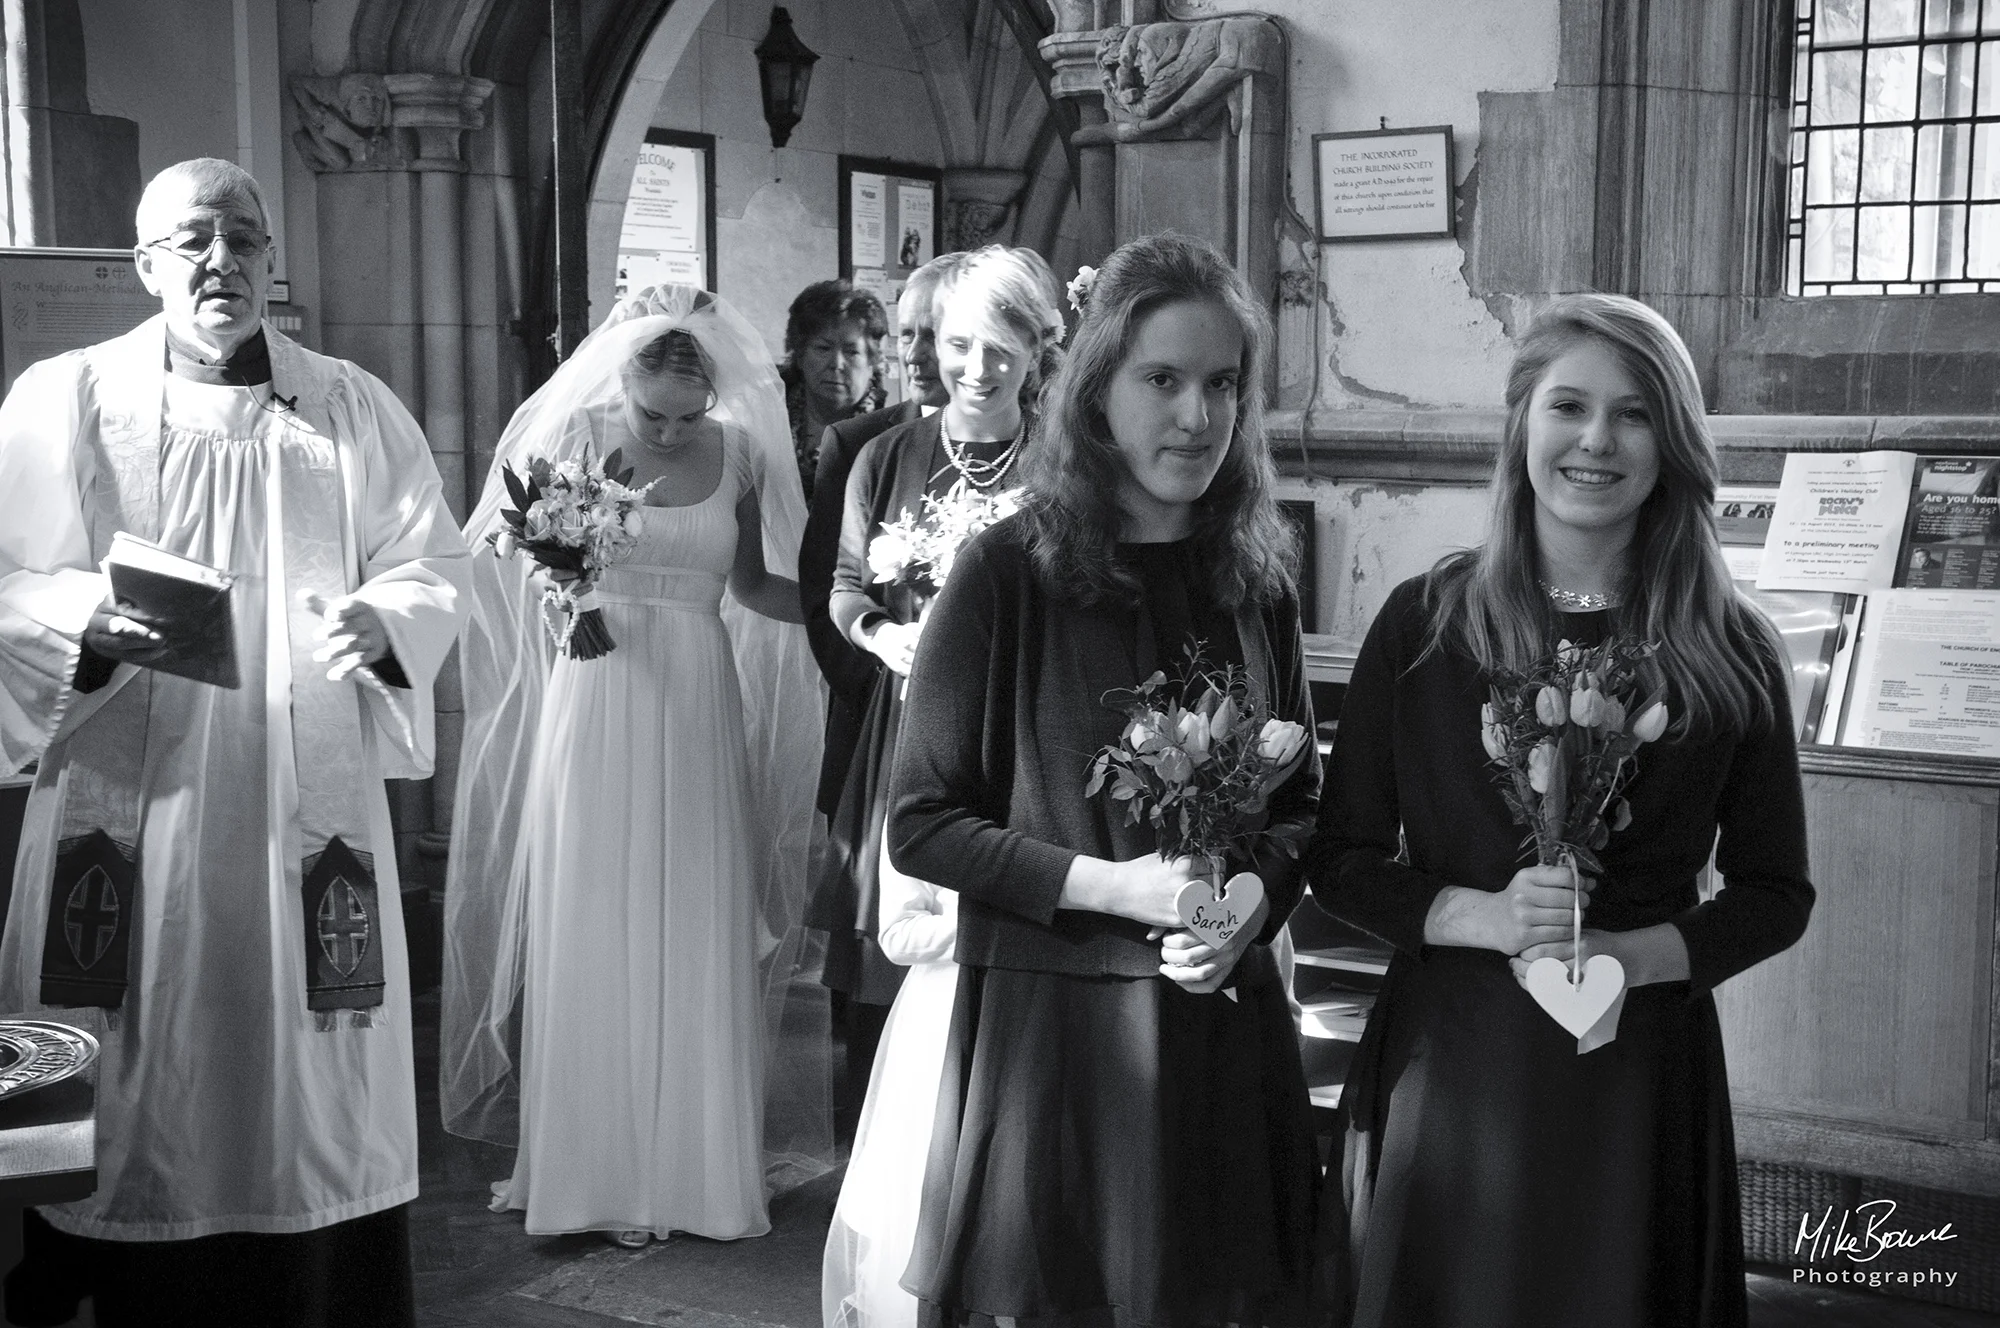 Bridal entourage and vicar entering the church